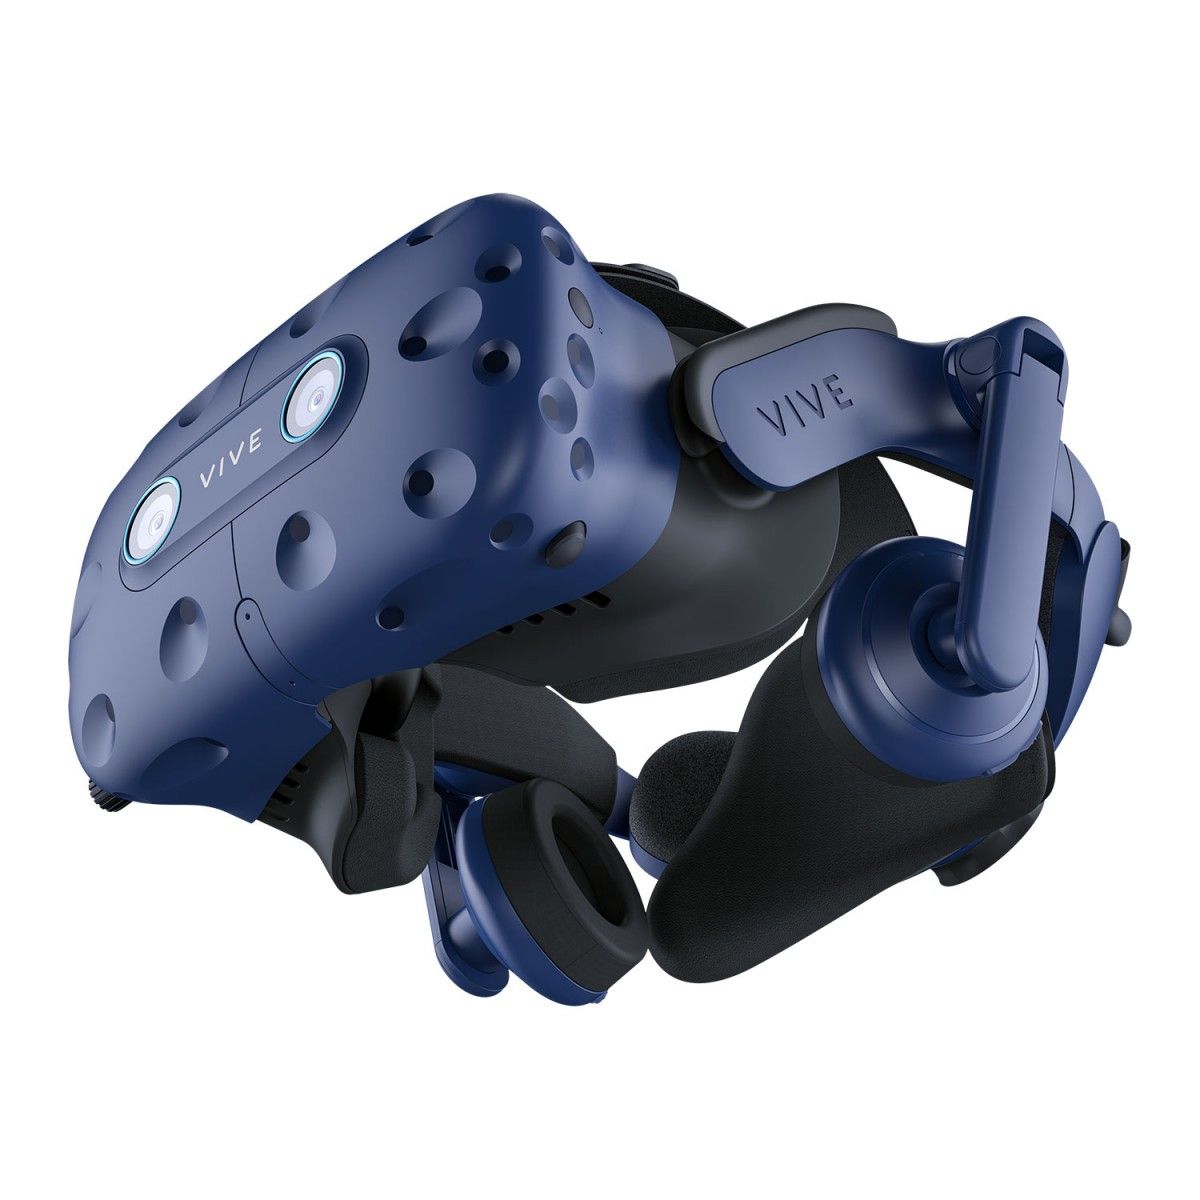 Очки виртуальной реальности HTC Vive Pro Eye Starter Kit